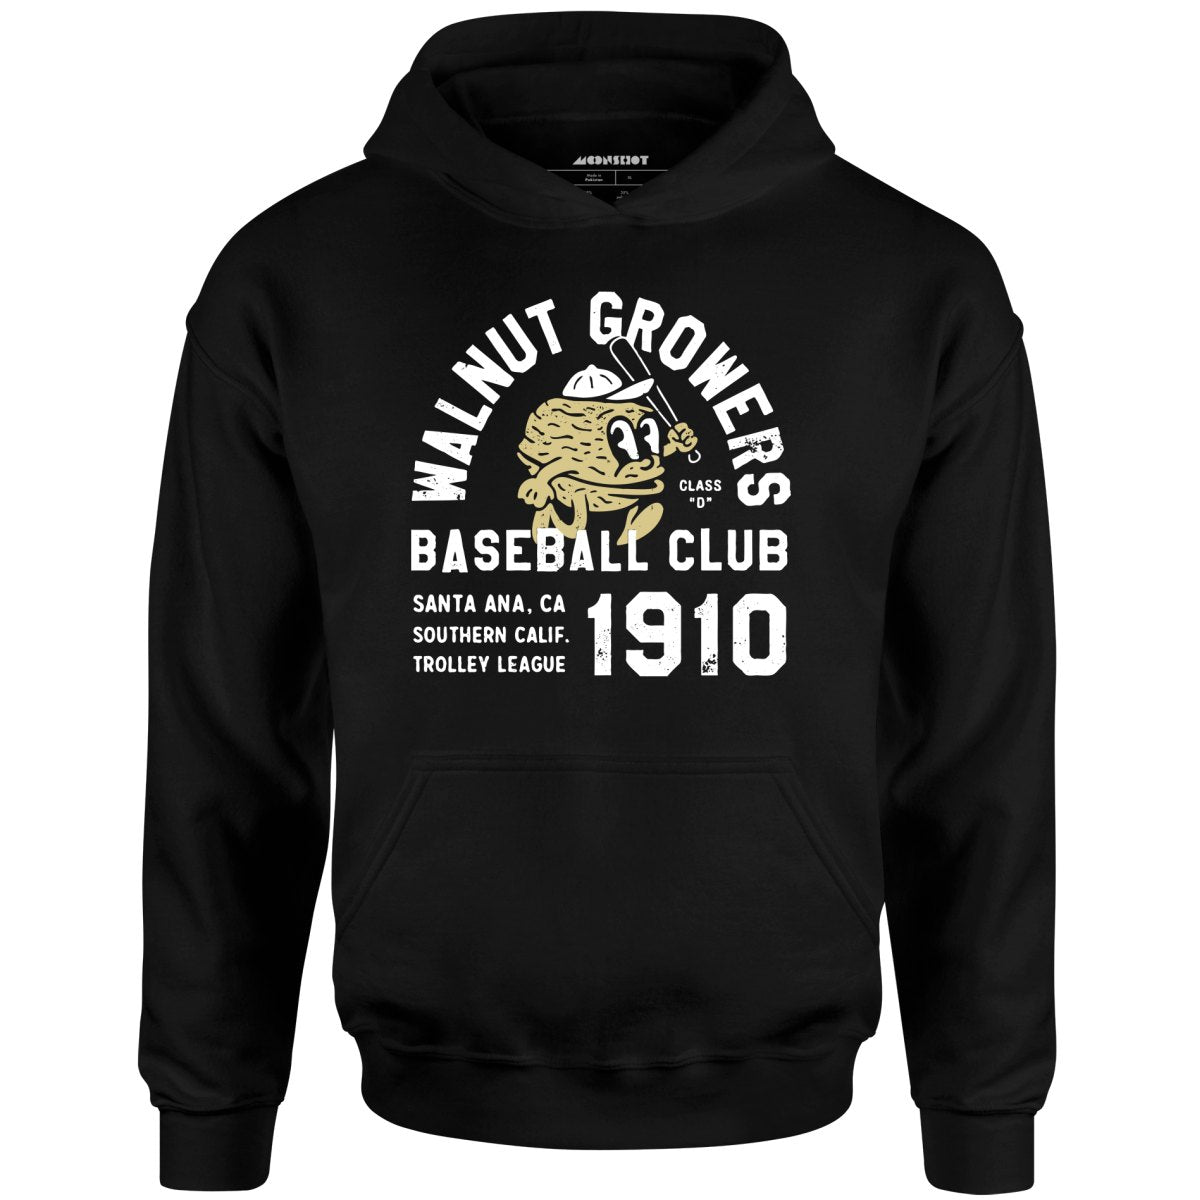 Santa Ana Walnut Growers - California - Vintage Defunct Baseball Teams - Unisex Hoodie